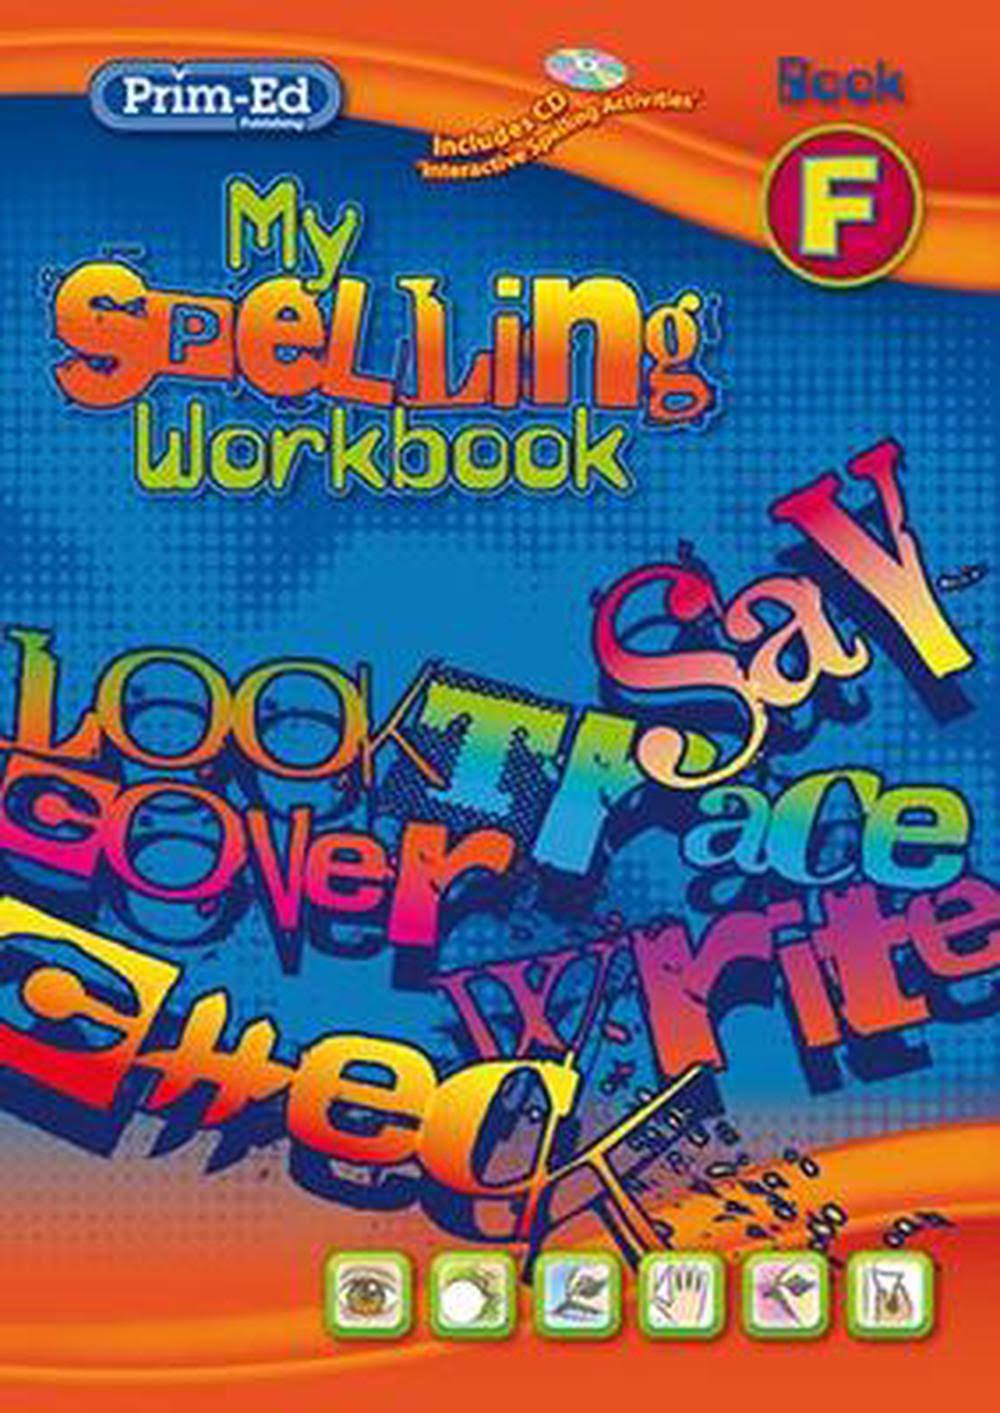 My Spelling Workbook: Book F. [Book]